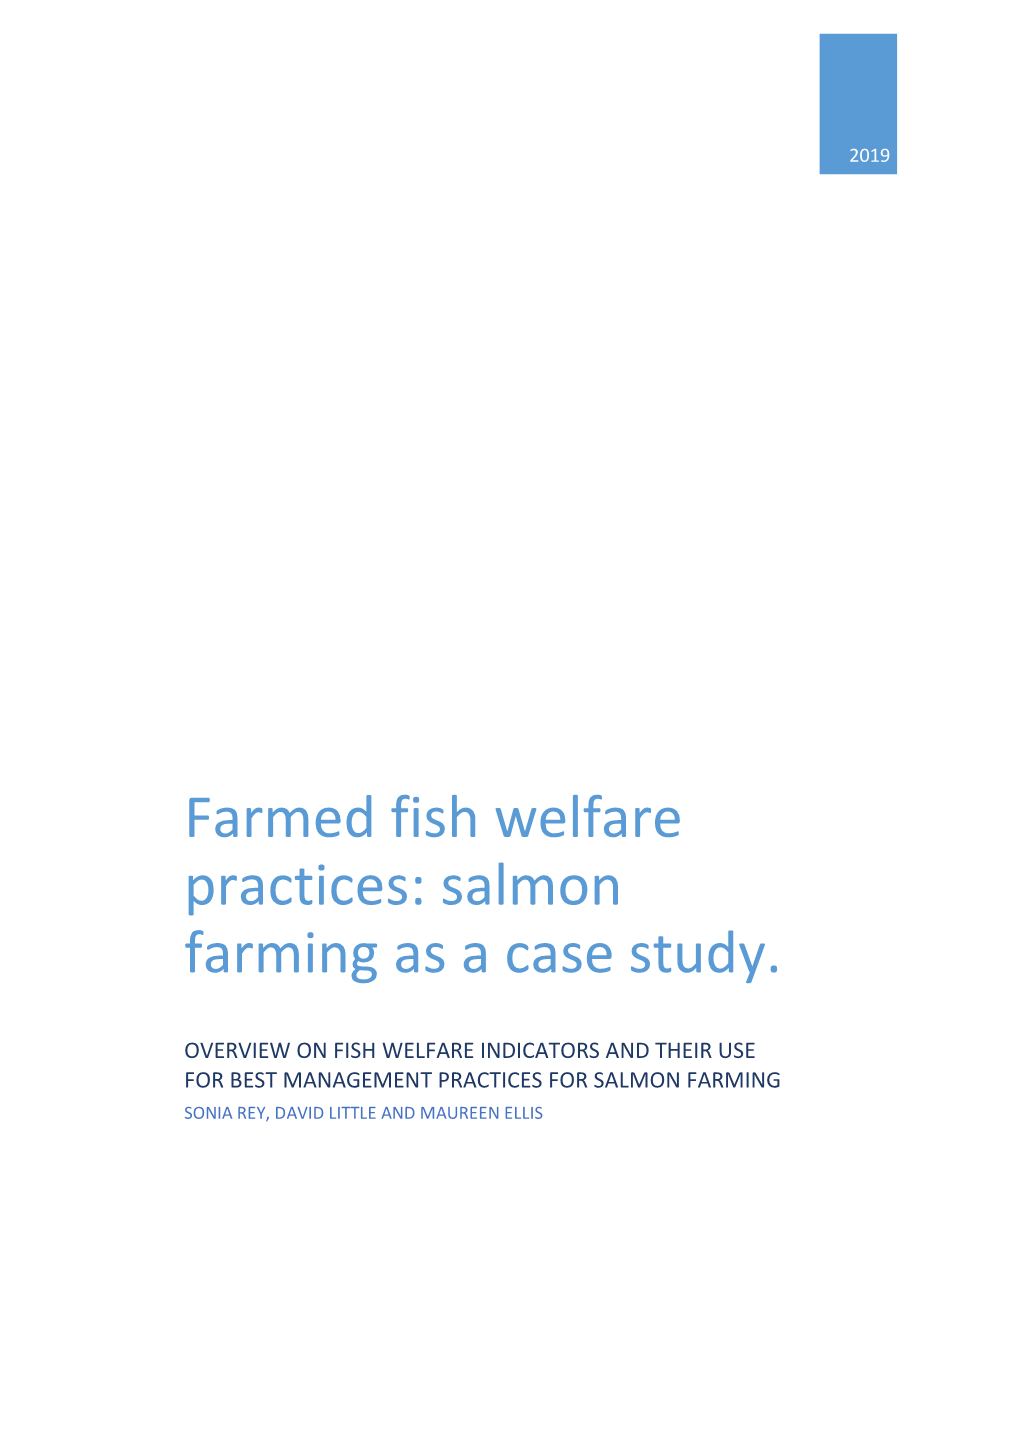 Farmed Fish Welfare Practices: Salmon Farming As a Case Study